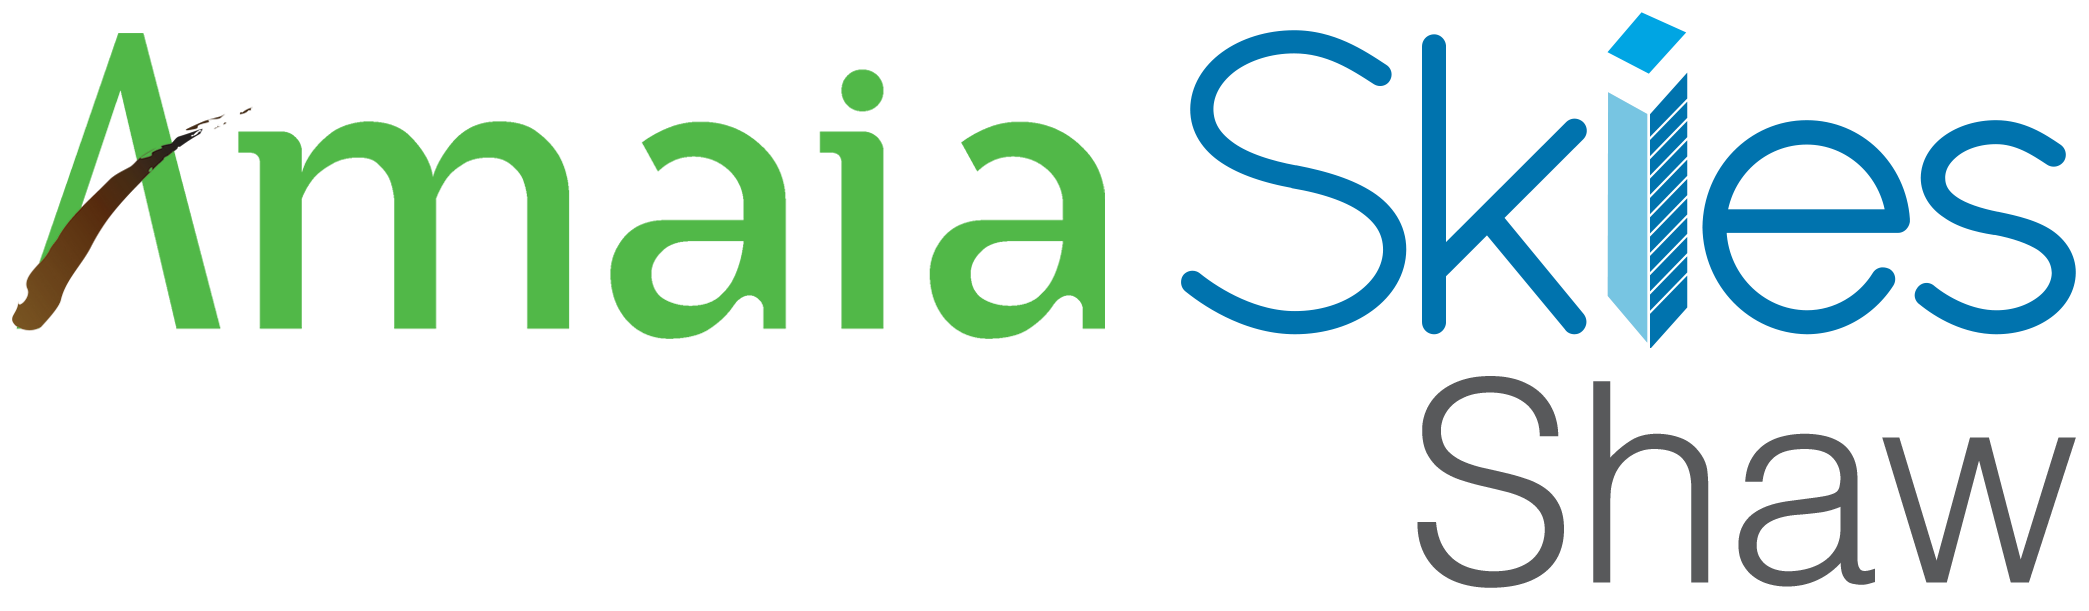 name logo